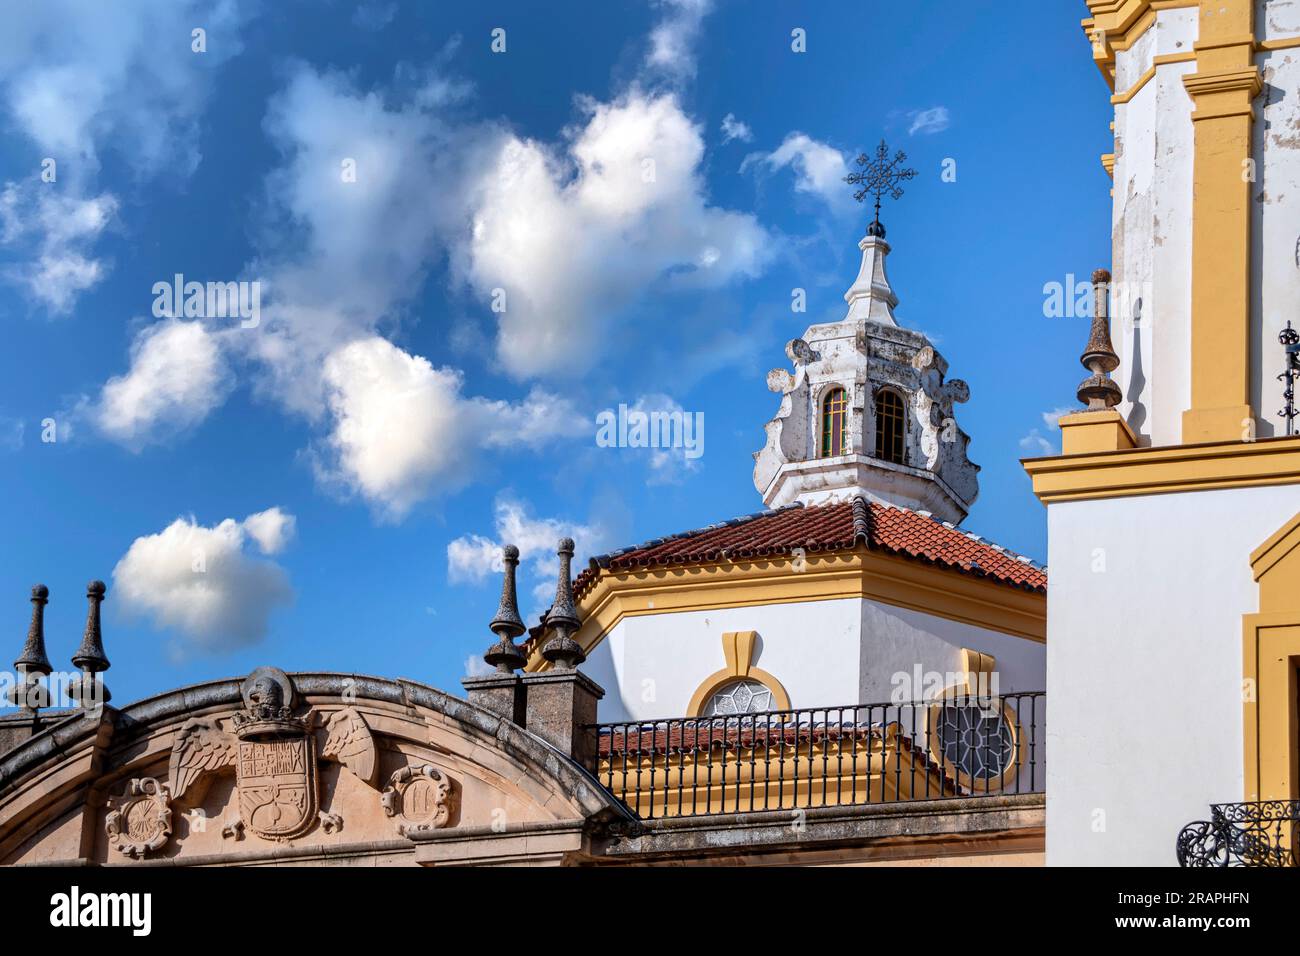 Detail view of part of the tower and the roof Parroquia de Nuestra Señora del Rosario de Ronda, Malaga, Spain Stock Photo